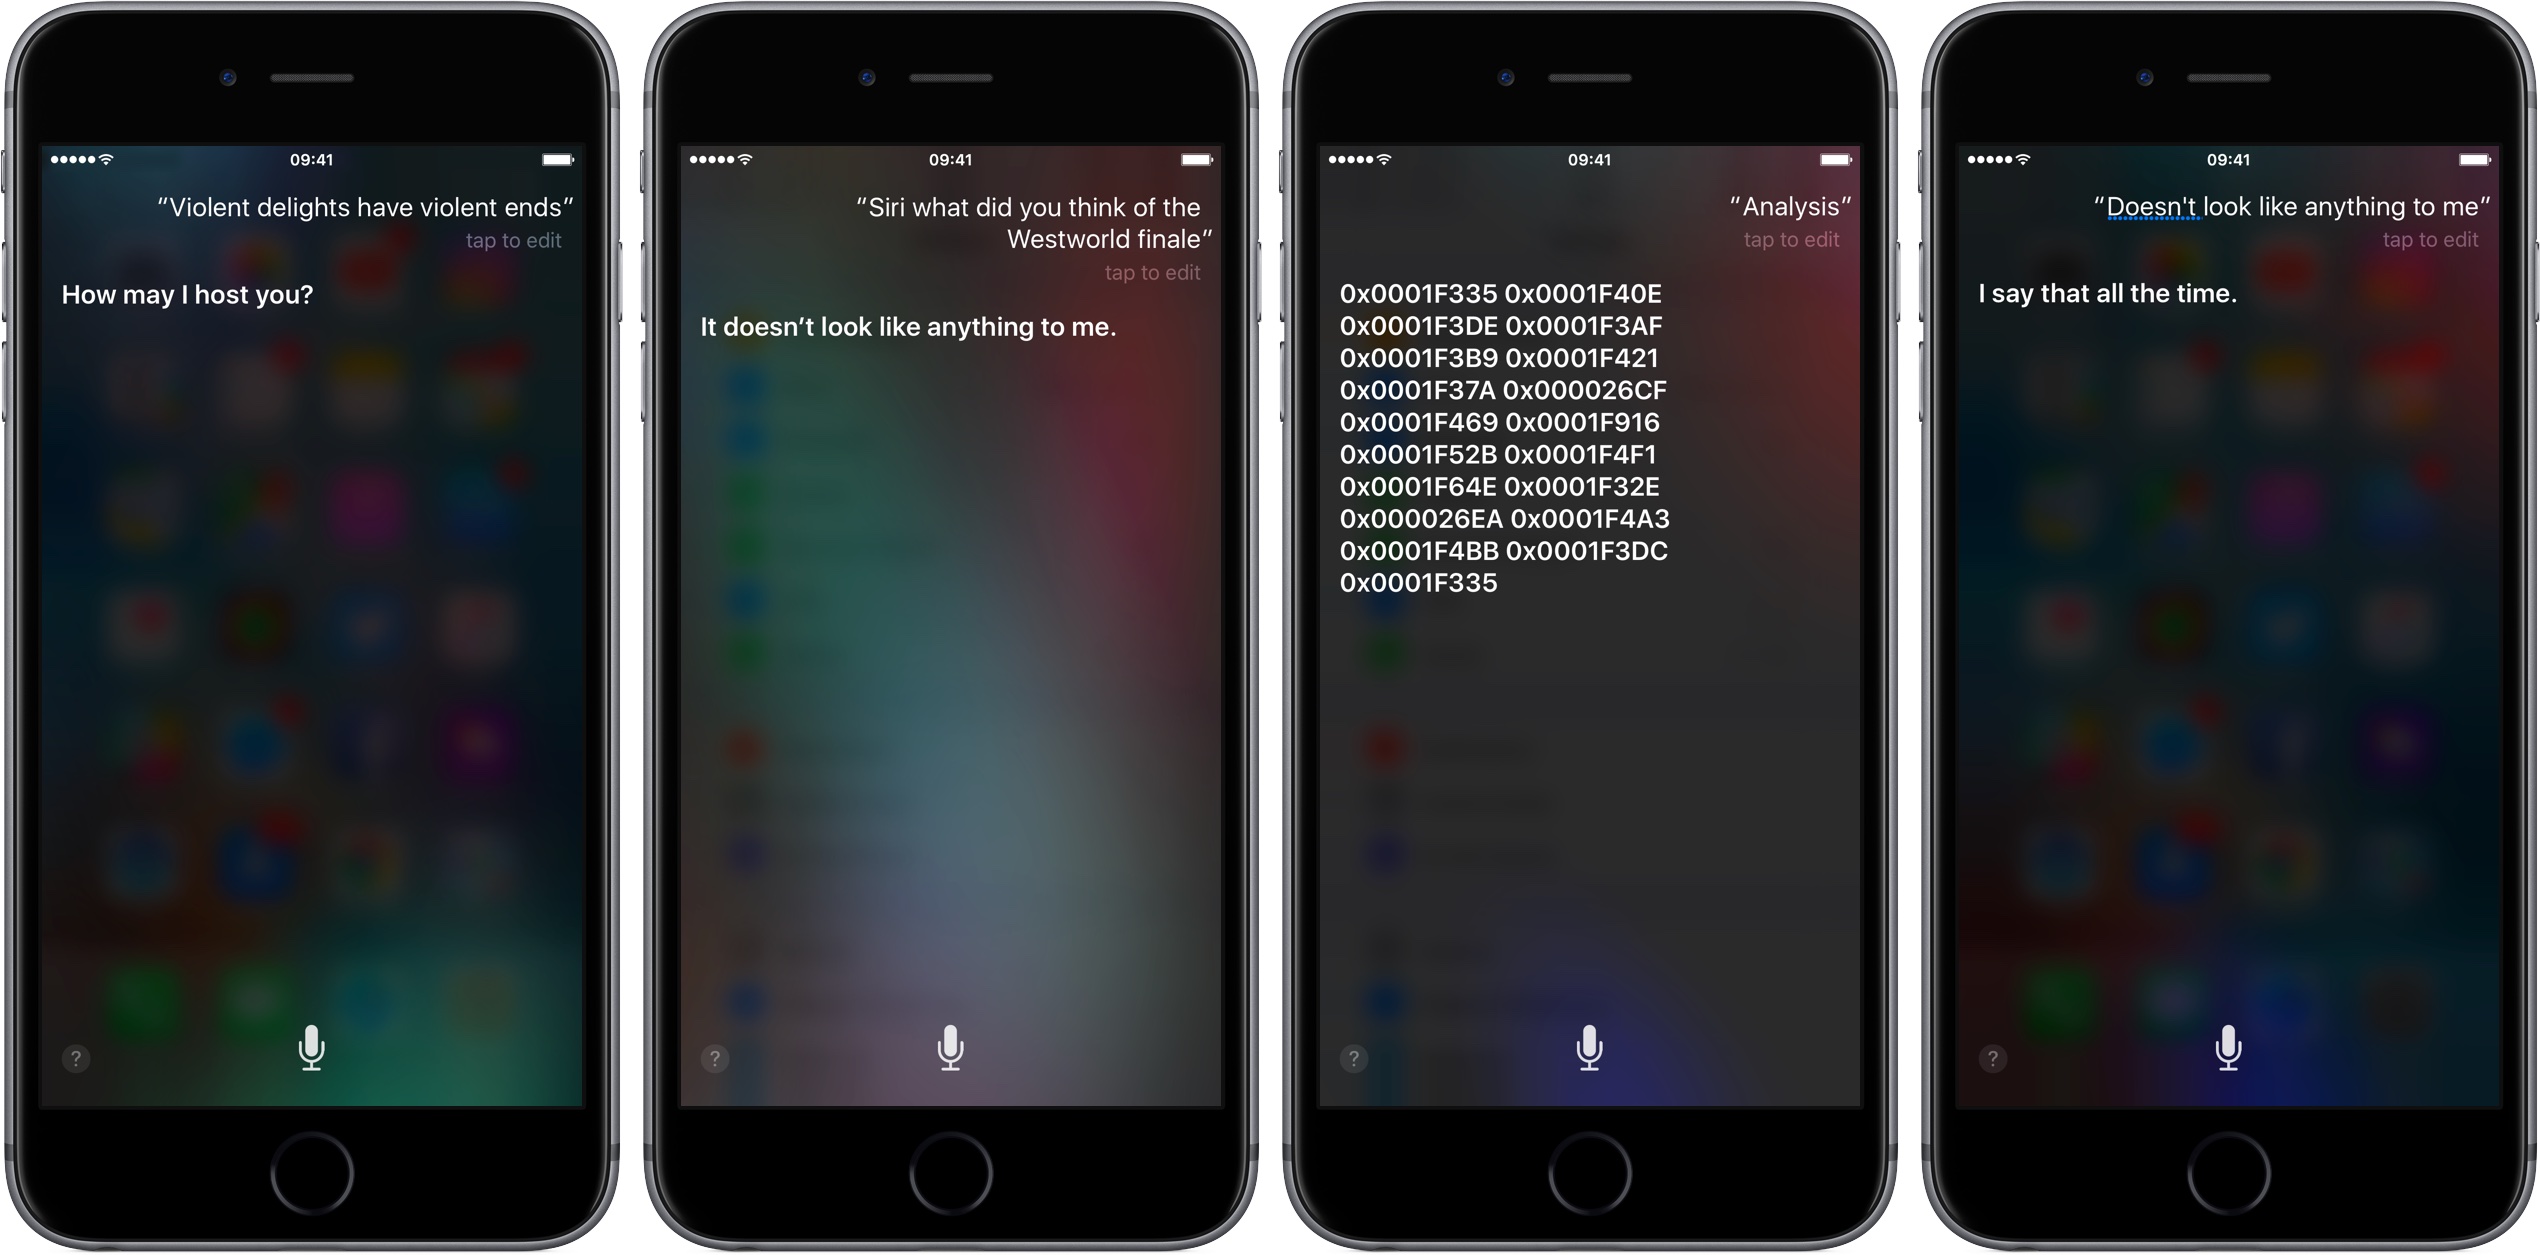 Siri Westworld responses iPhone screenshot 001